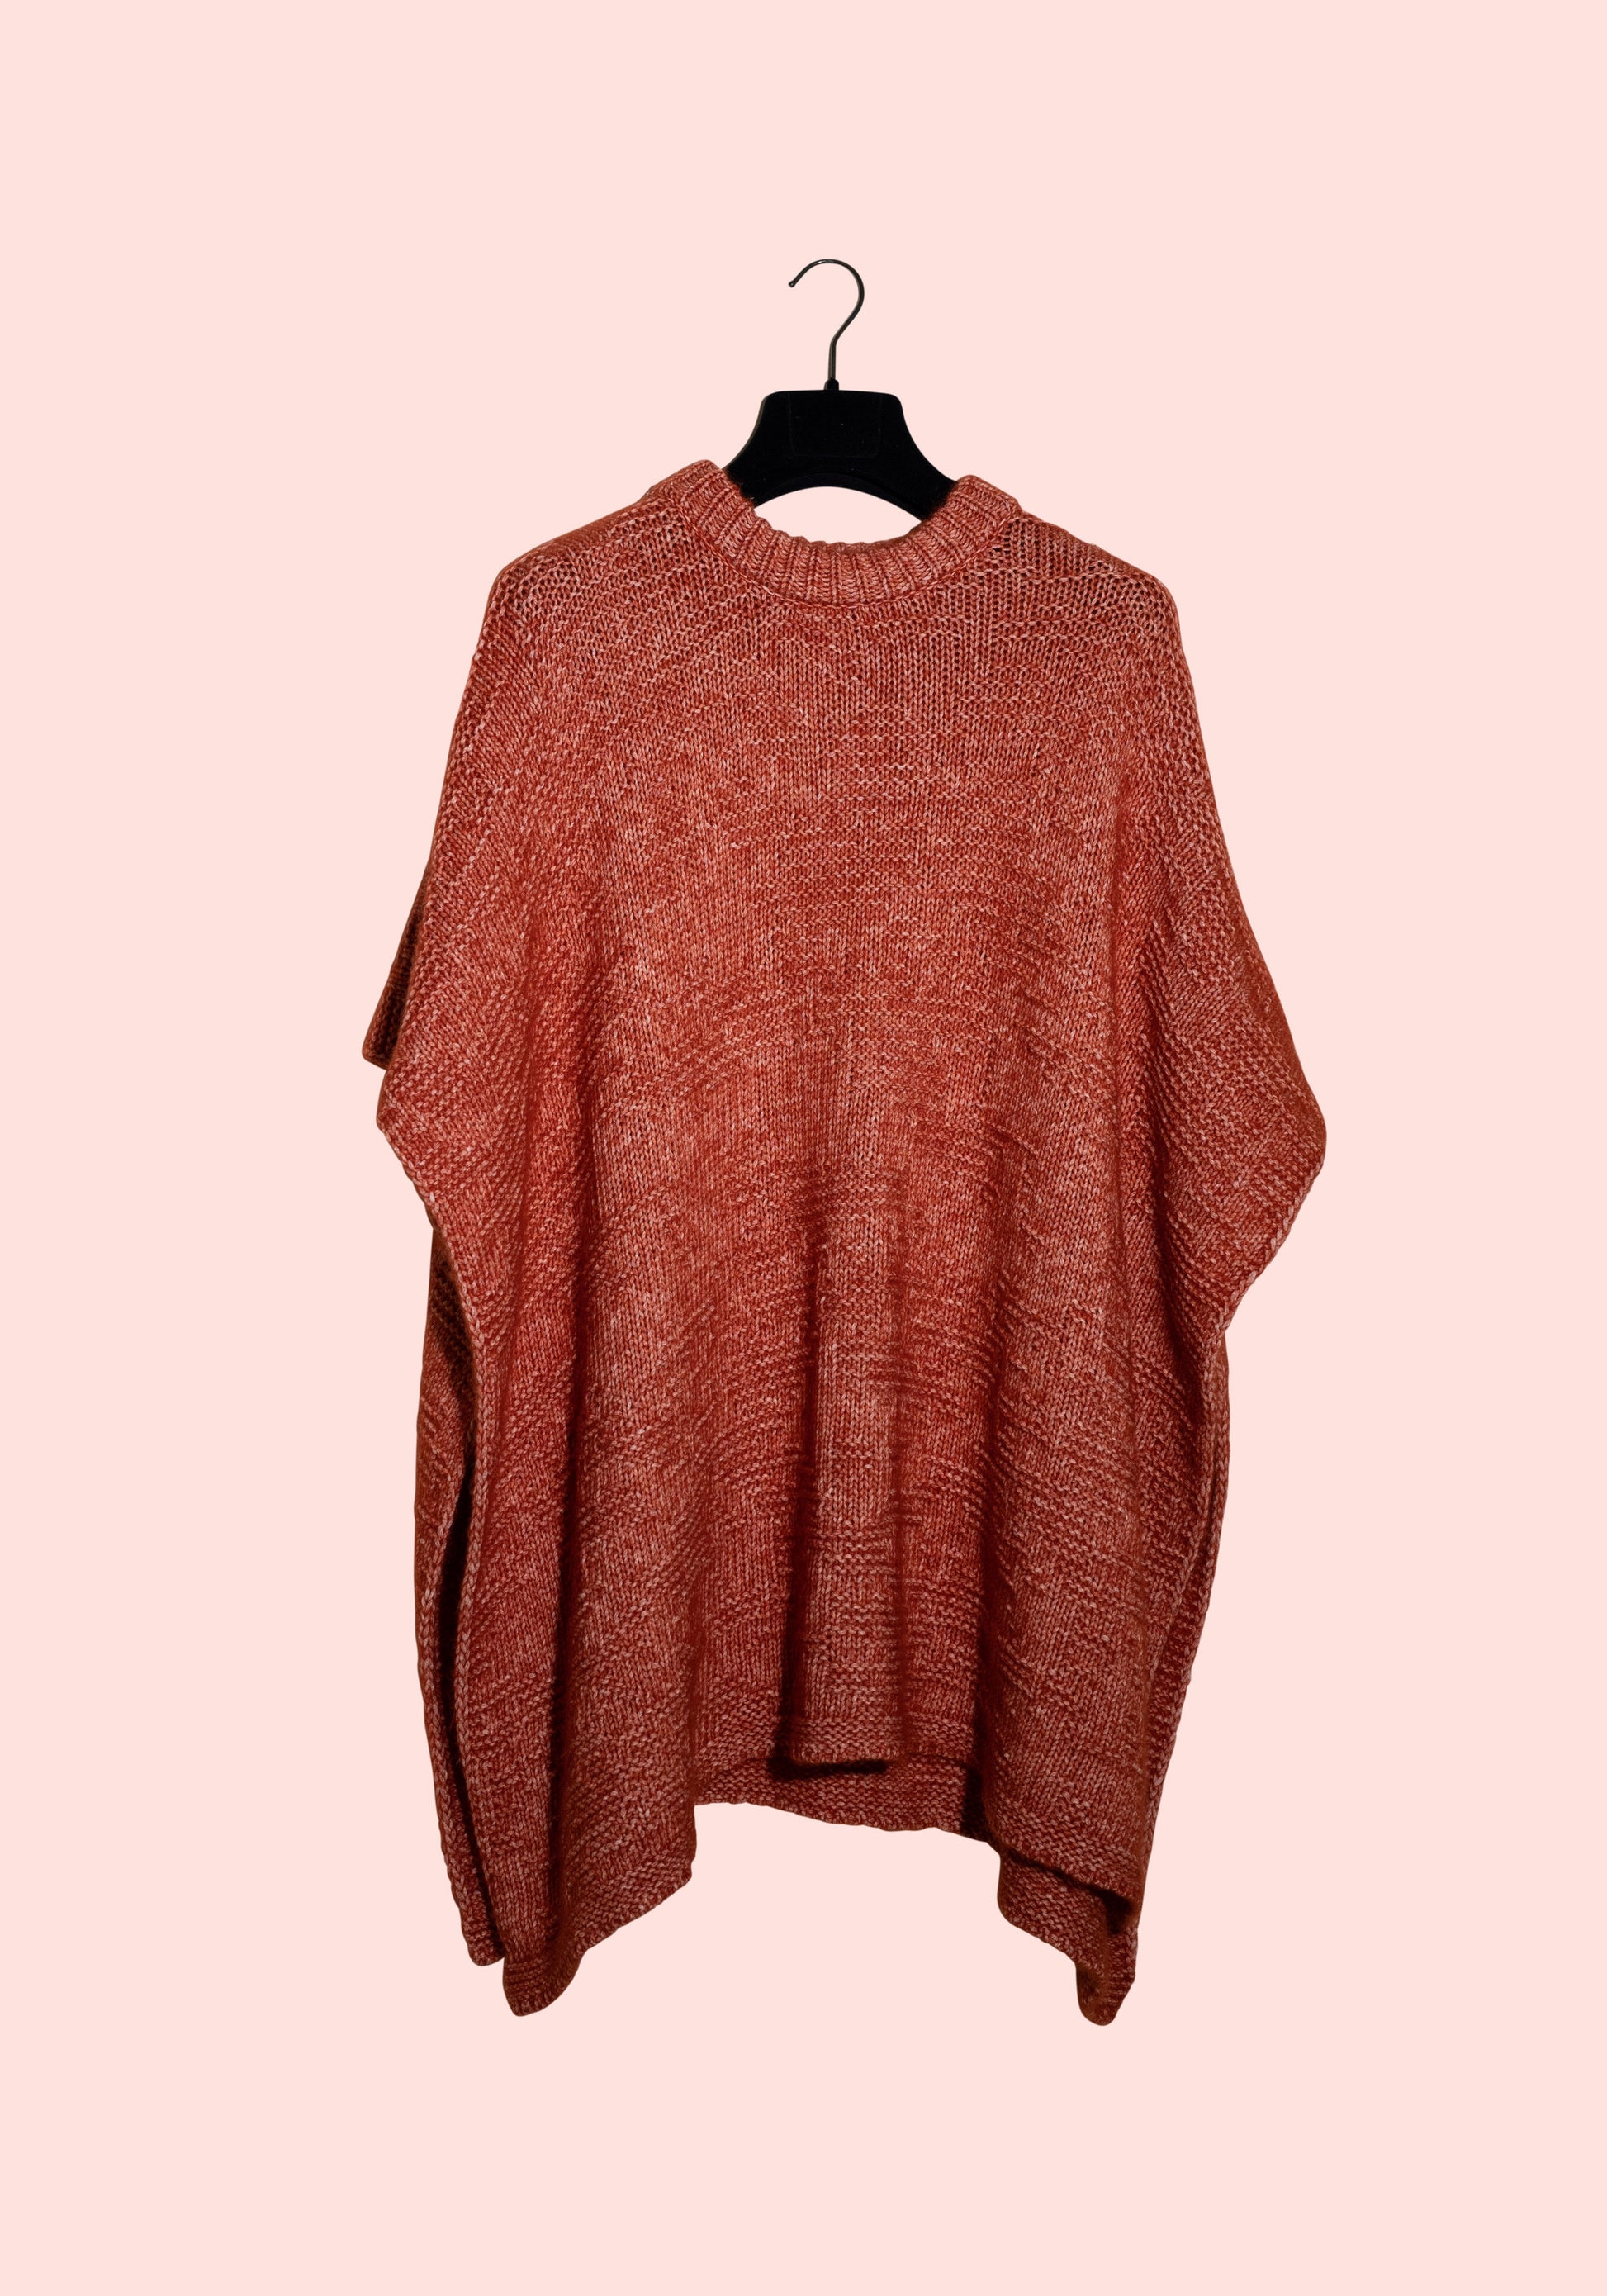 Wool knitted orange poncho